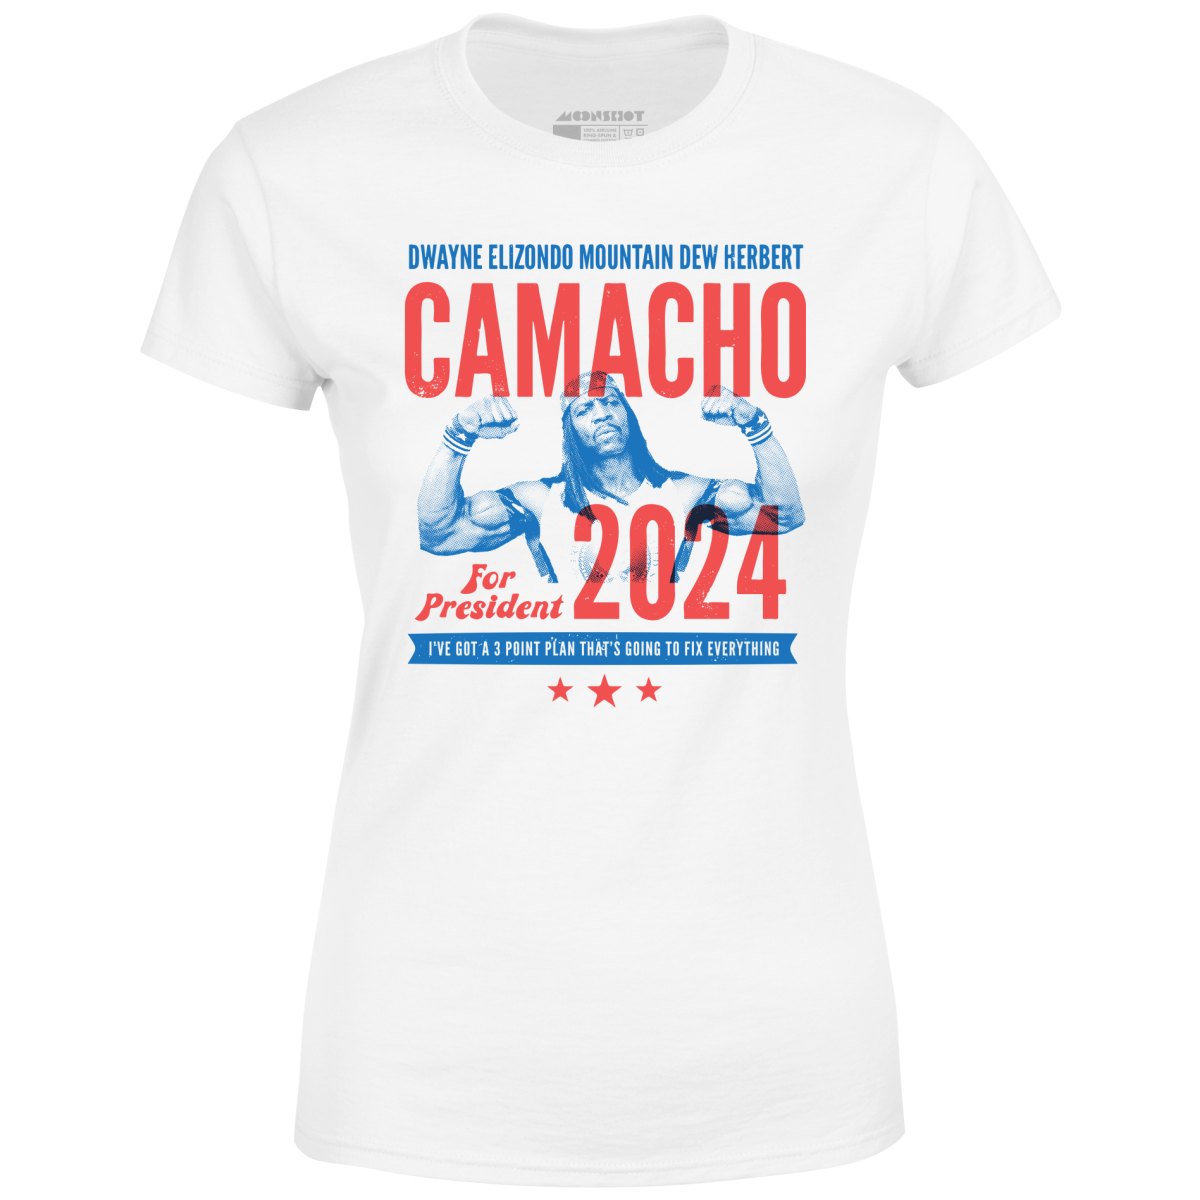 Camacho 2024 - Women's T-Shirt